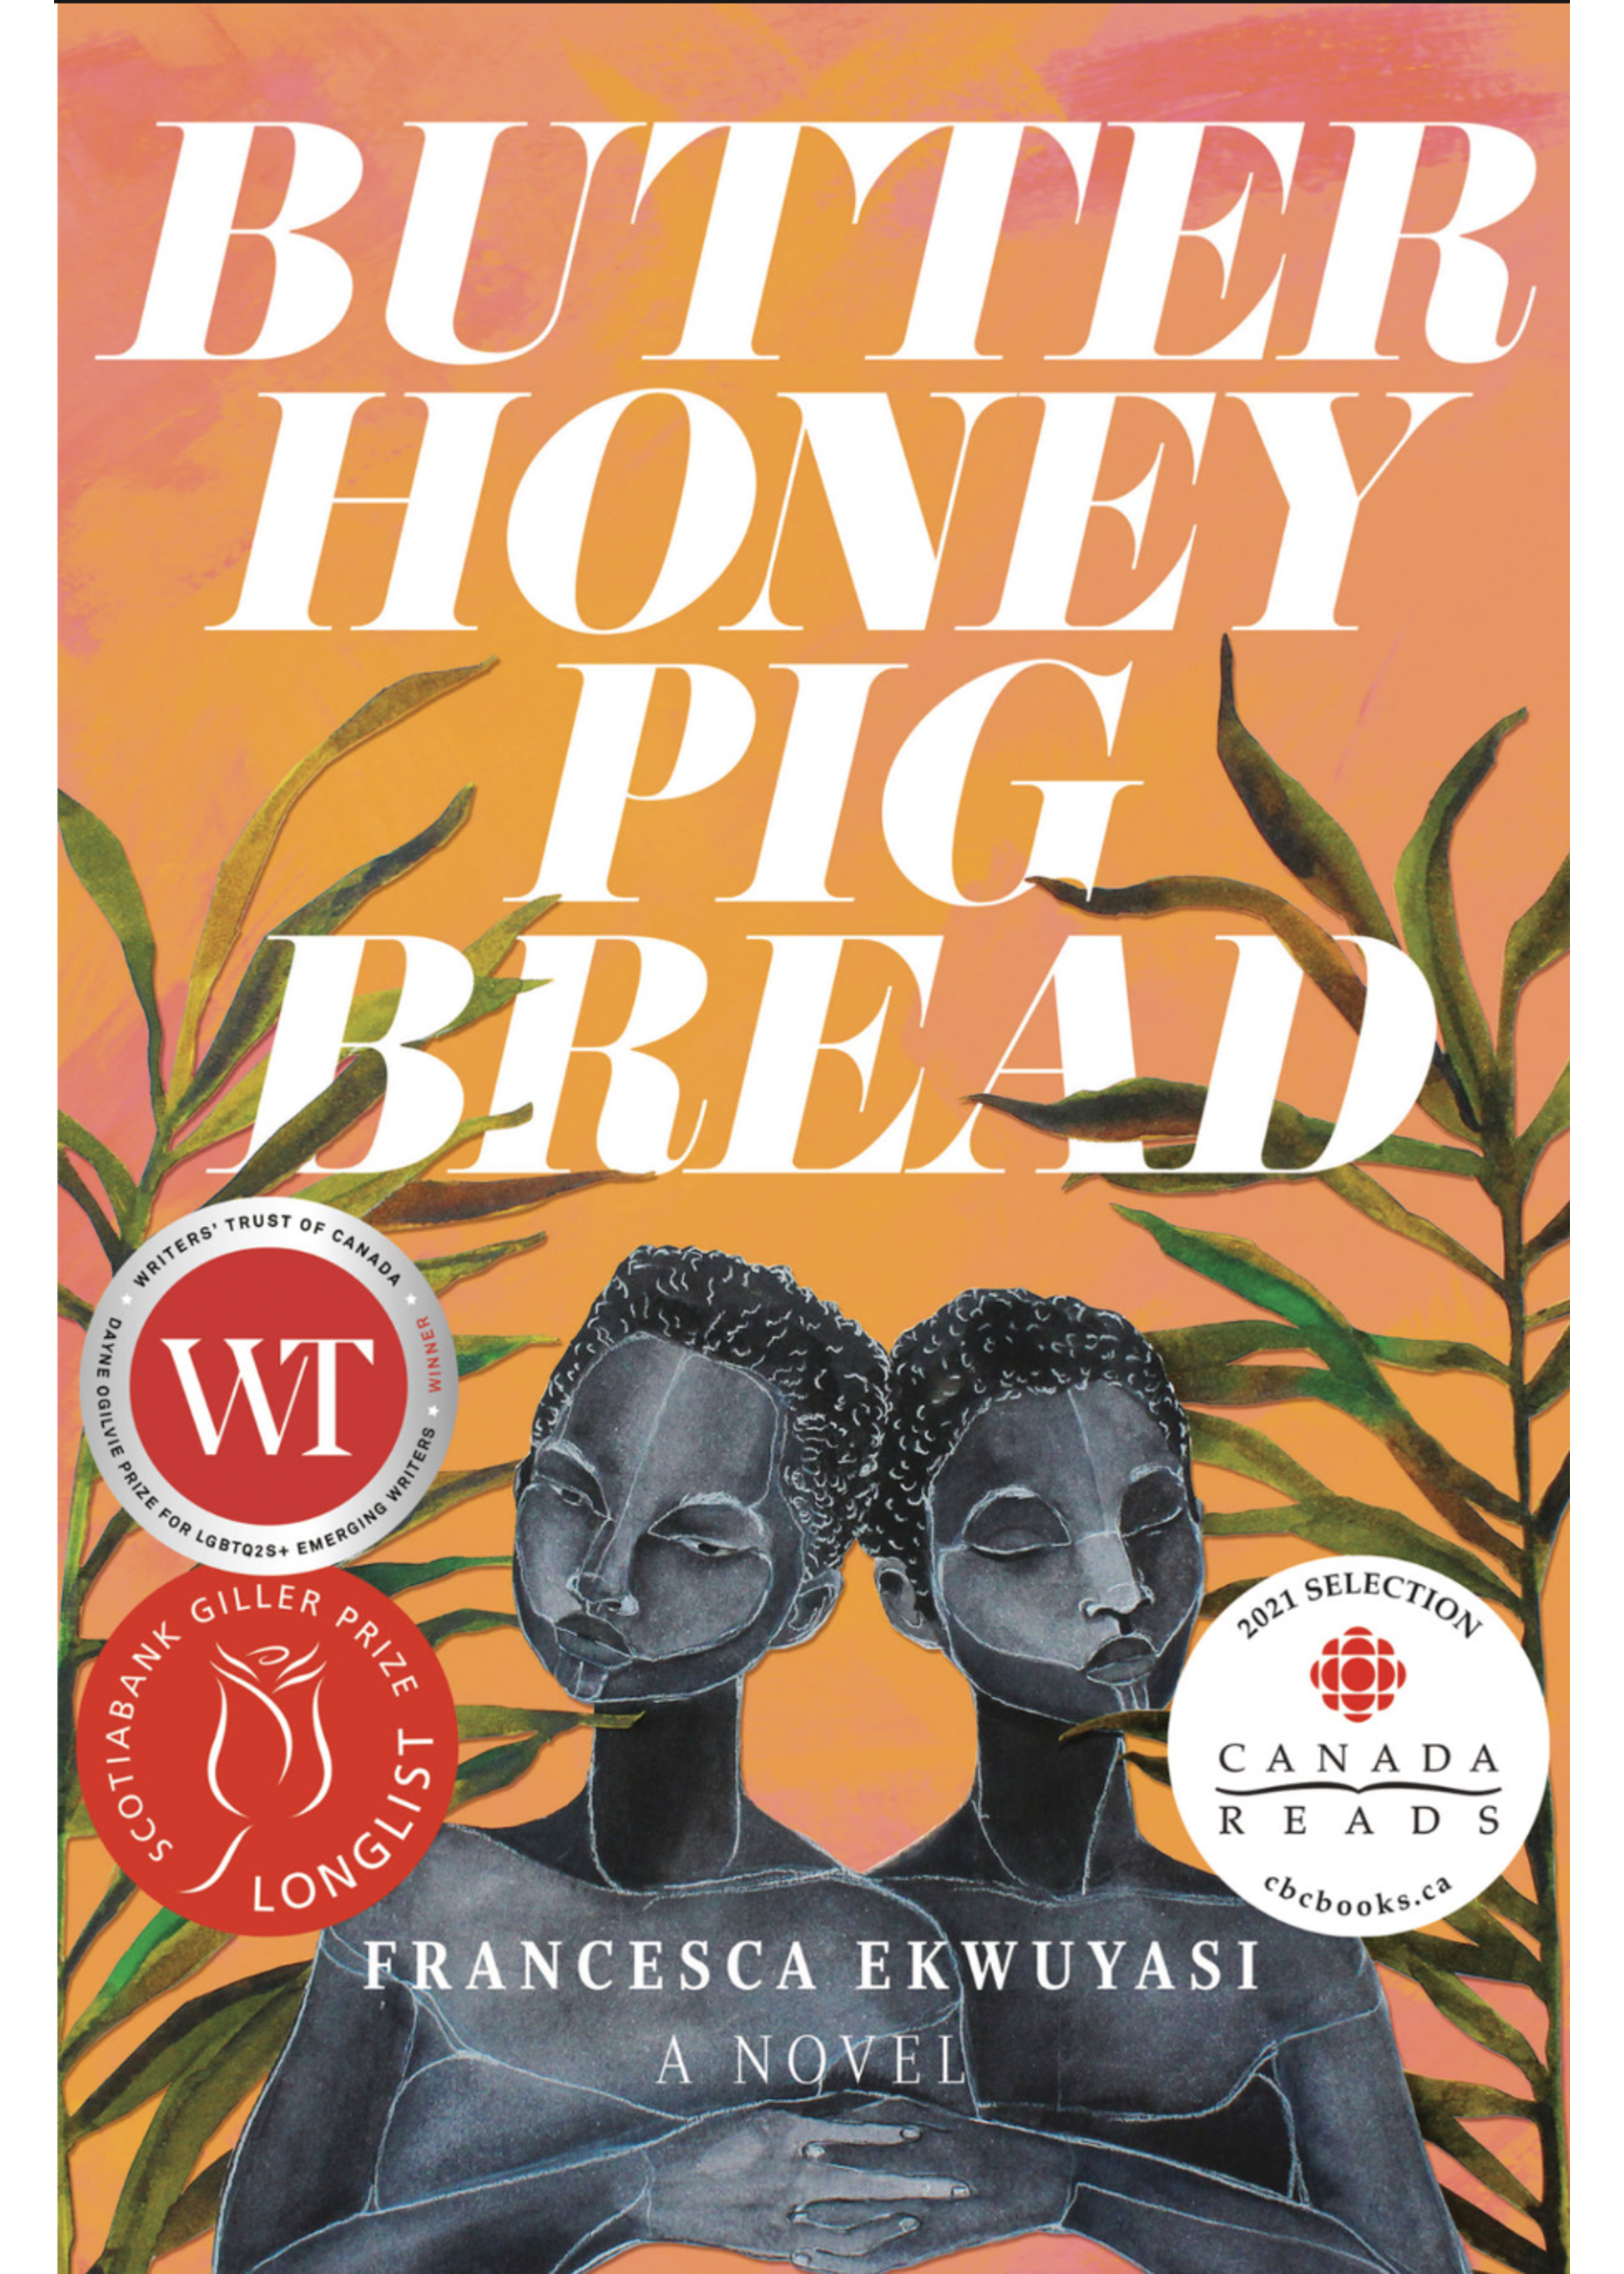 Butter Honey Bread Pig